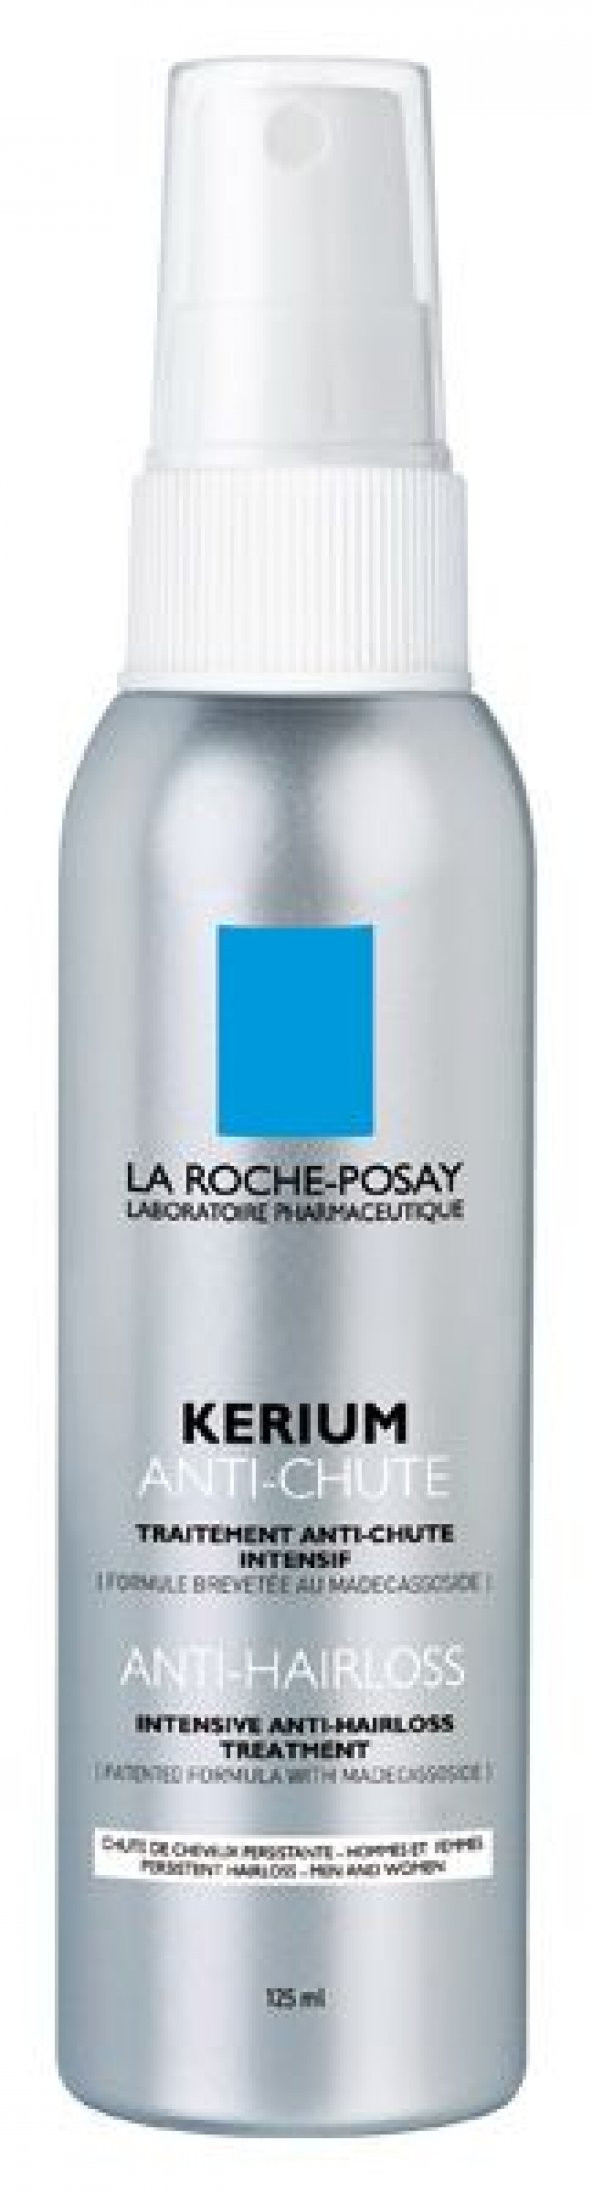 La Roche Posay Kerium AC Bakım Kürü 125 ml